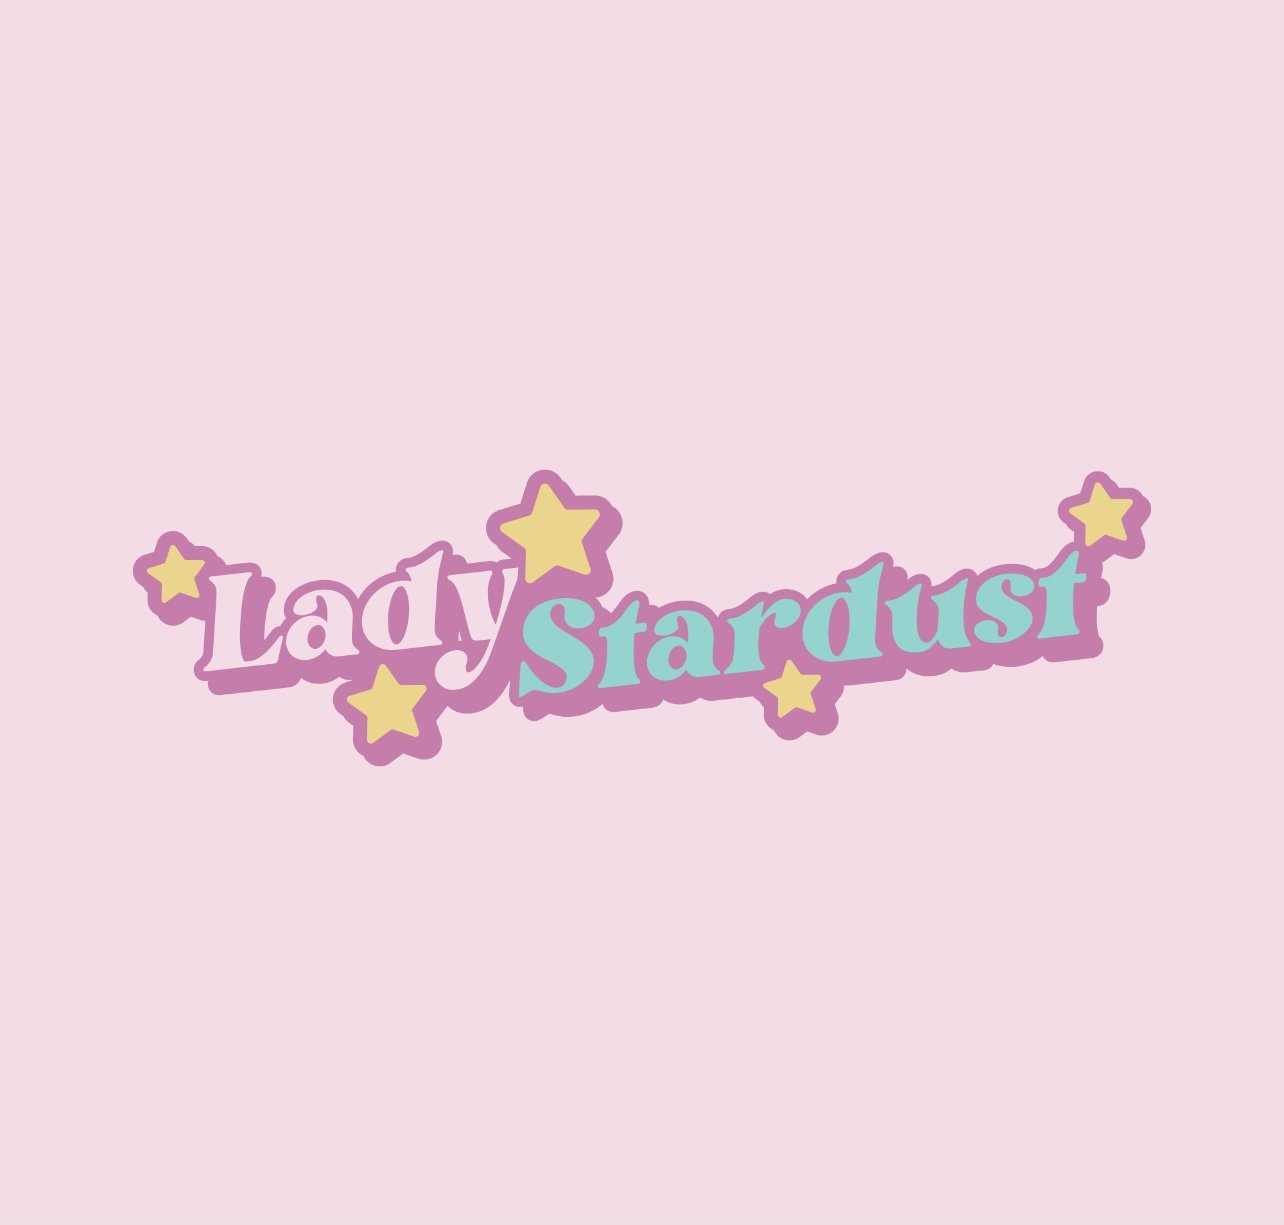 Lady Stardust Salon